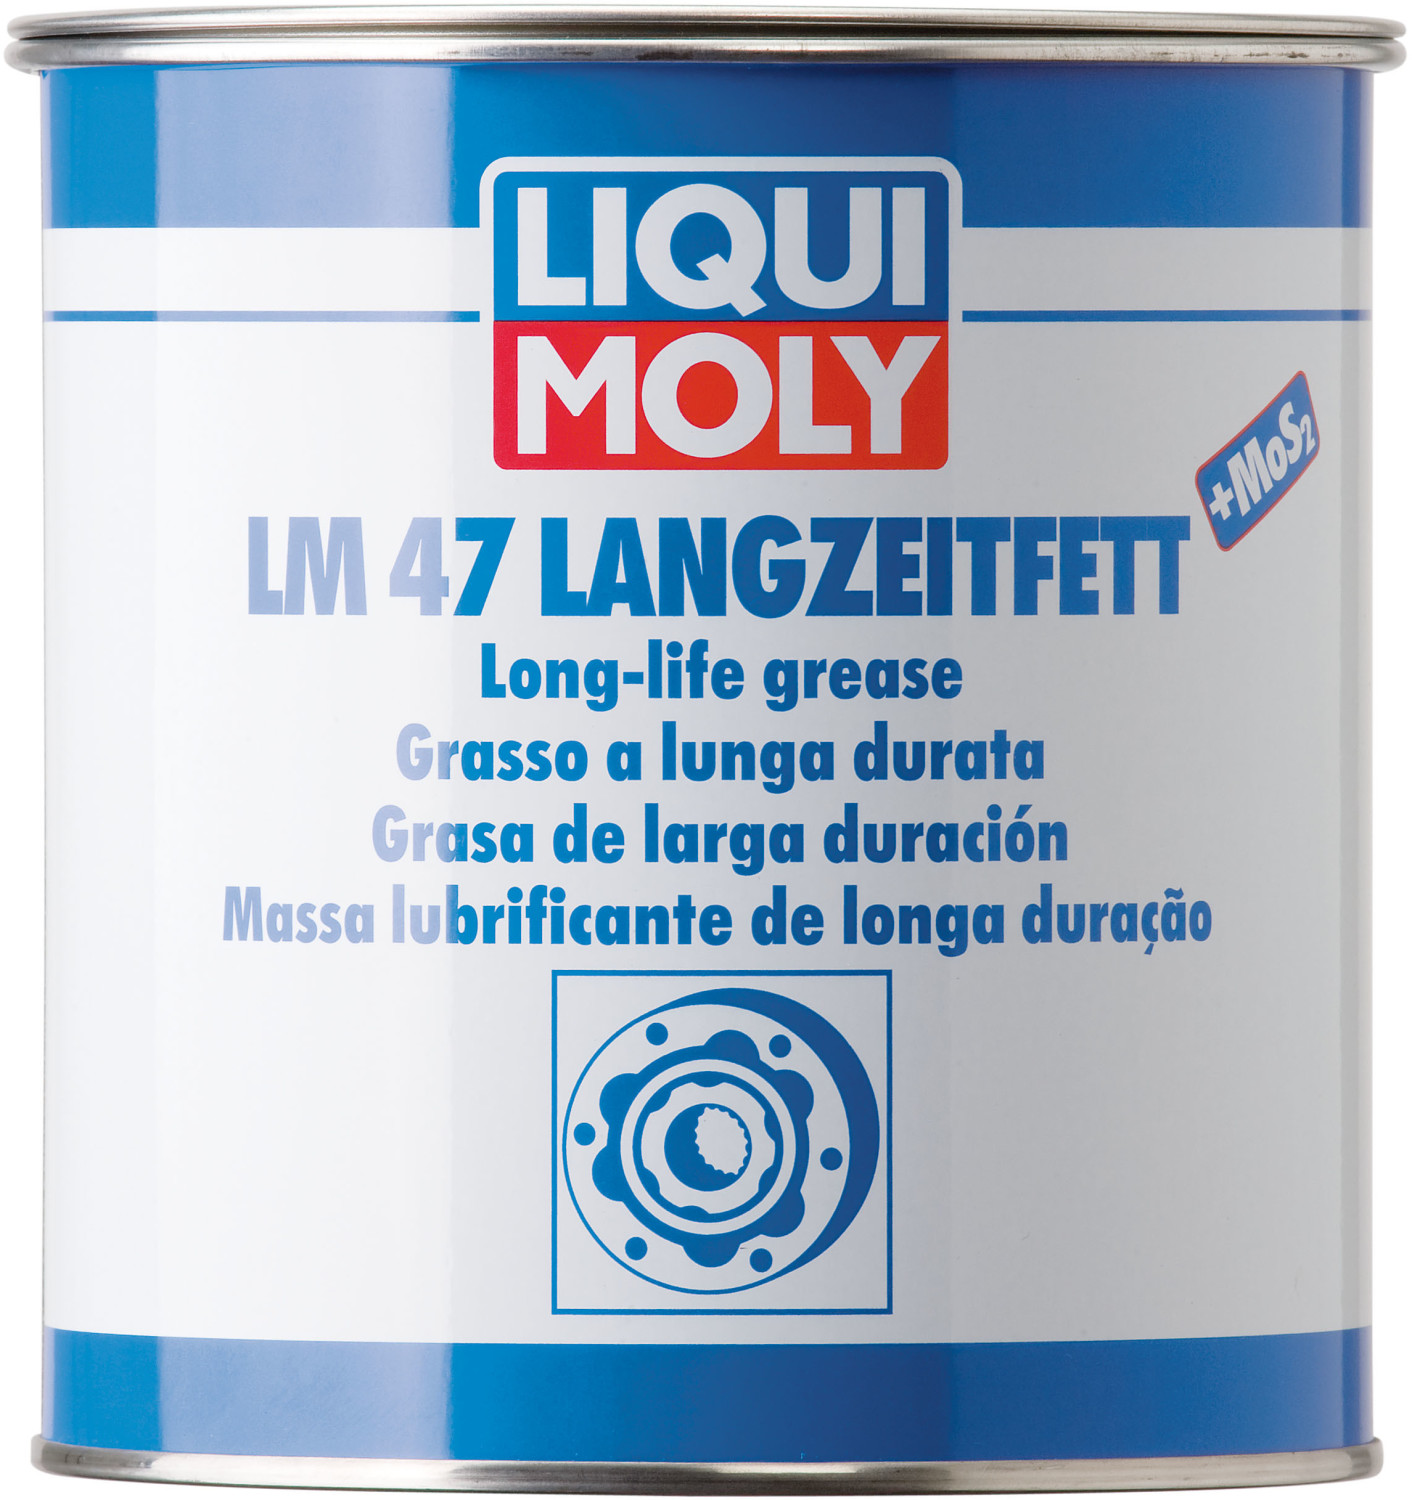 LIQUI MOLY LM 47 Langzeitfett + MoS2 (1 kg) ab 20,09